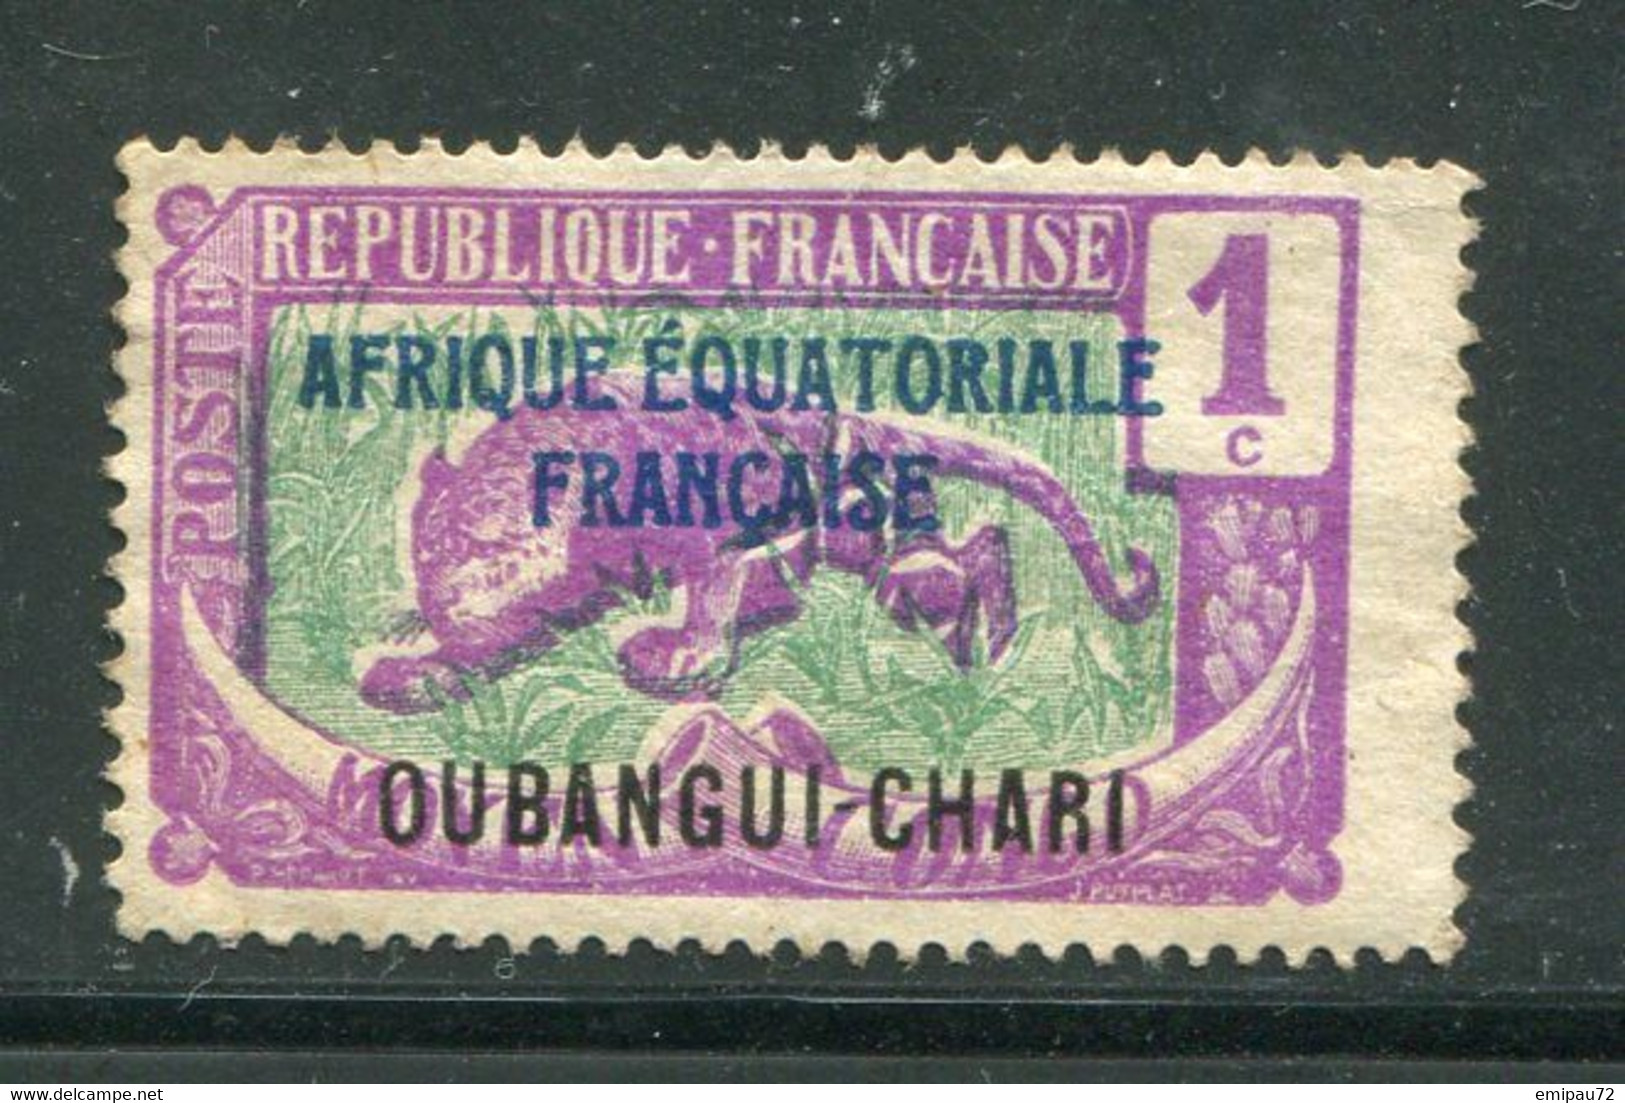 OUBANGUI- Y&T N°43- Oblitéré - Used Stamps